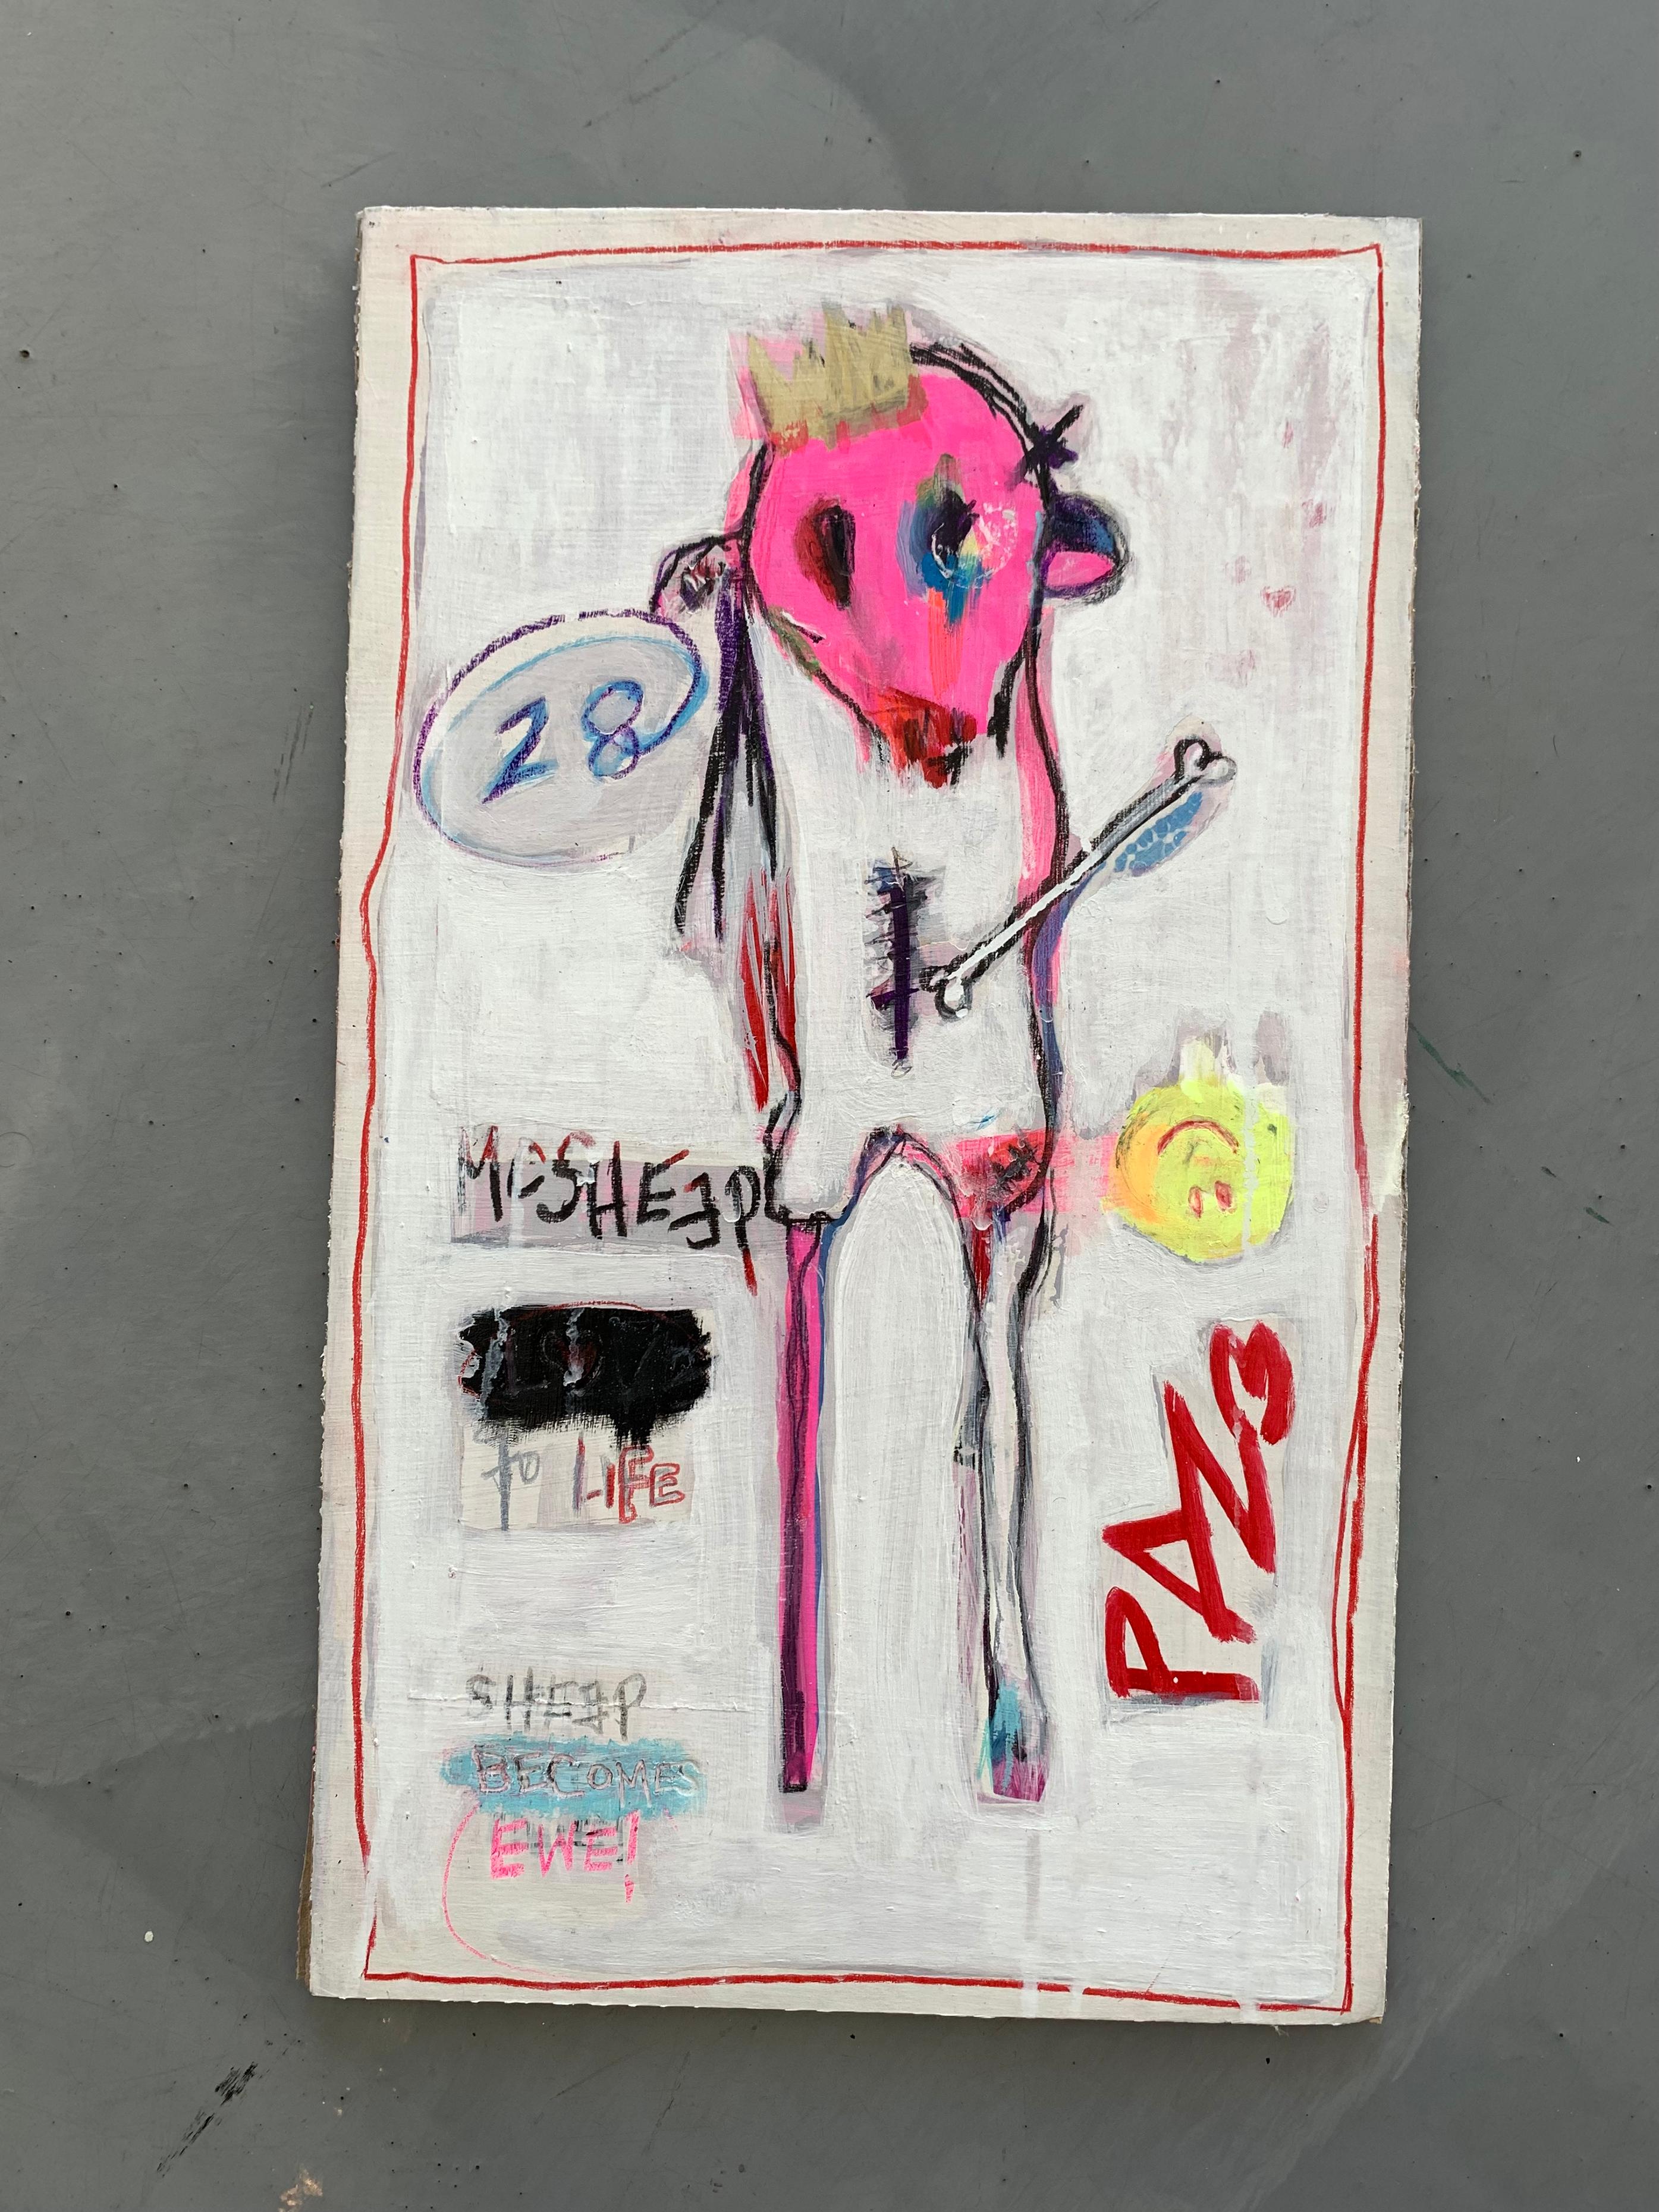 Mc Sheep - Acrylic on Cardboard - Painting by Little Ricky